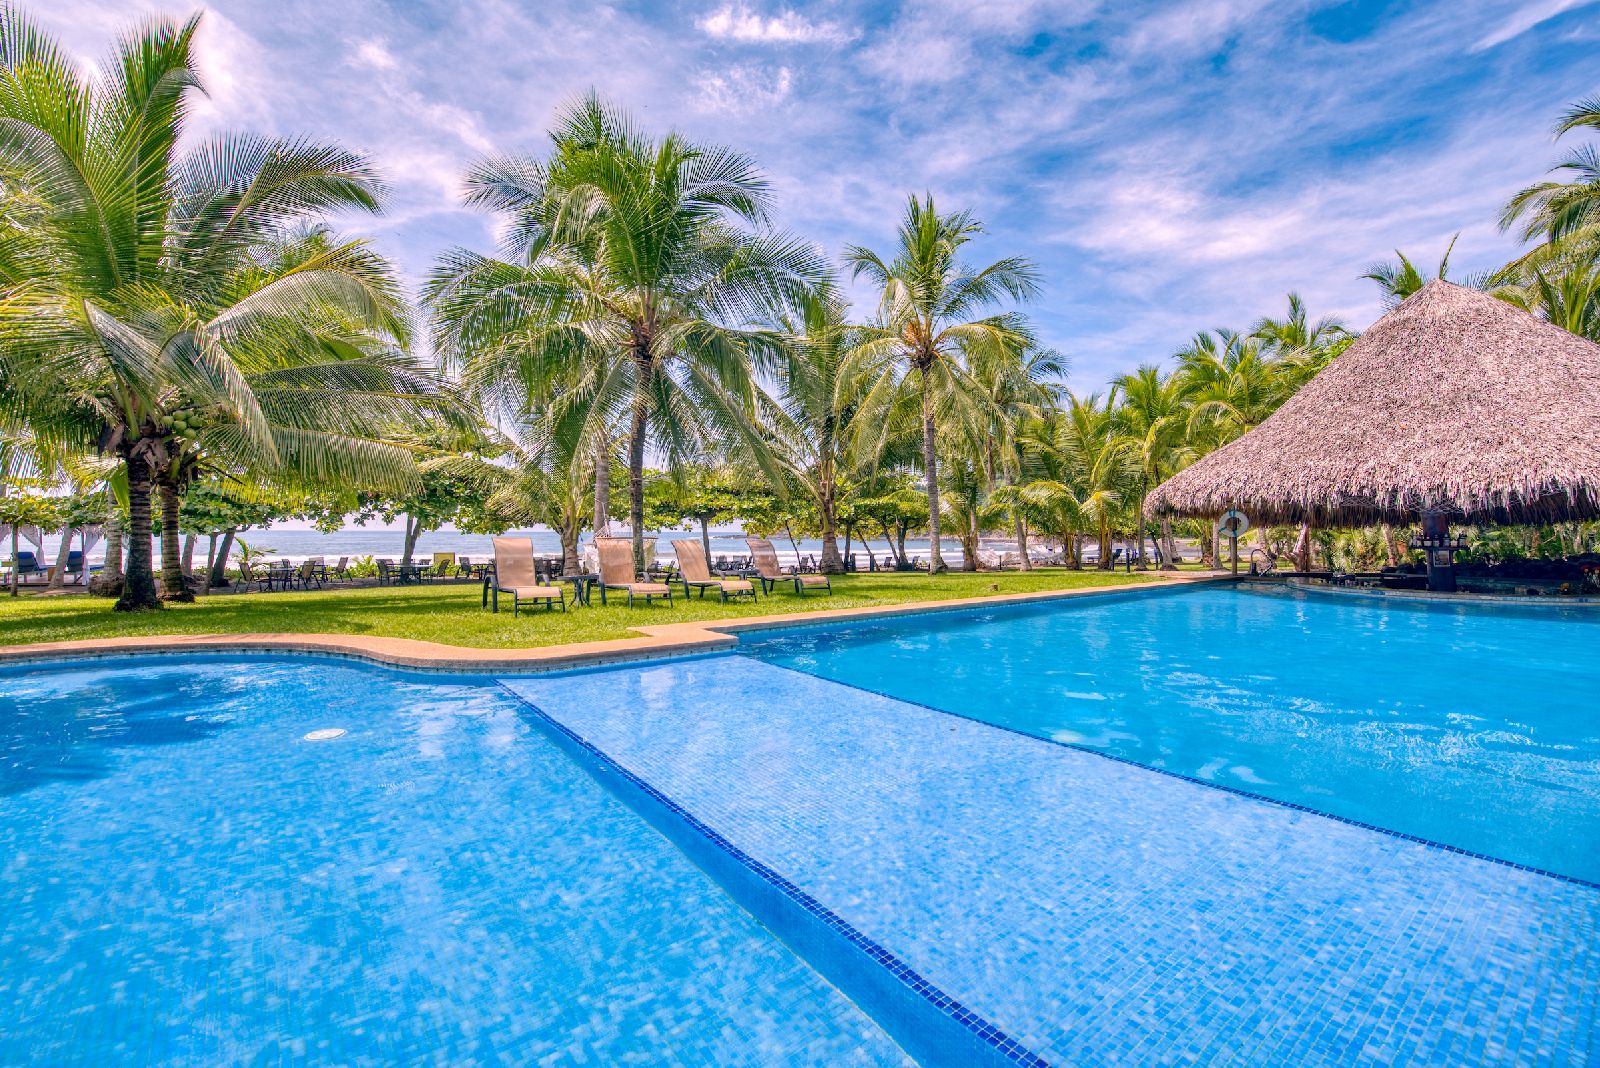 One of the swimming pools at Punta Islita beach hotel Costa Rica